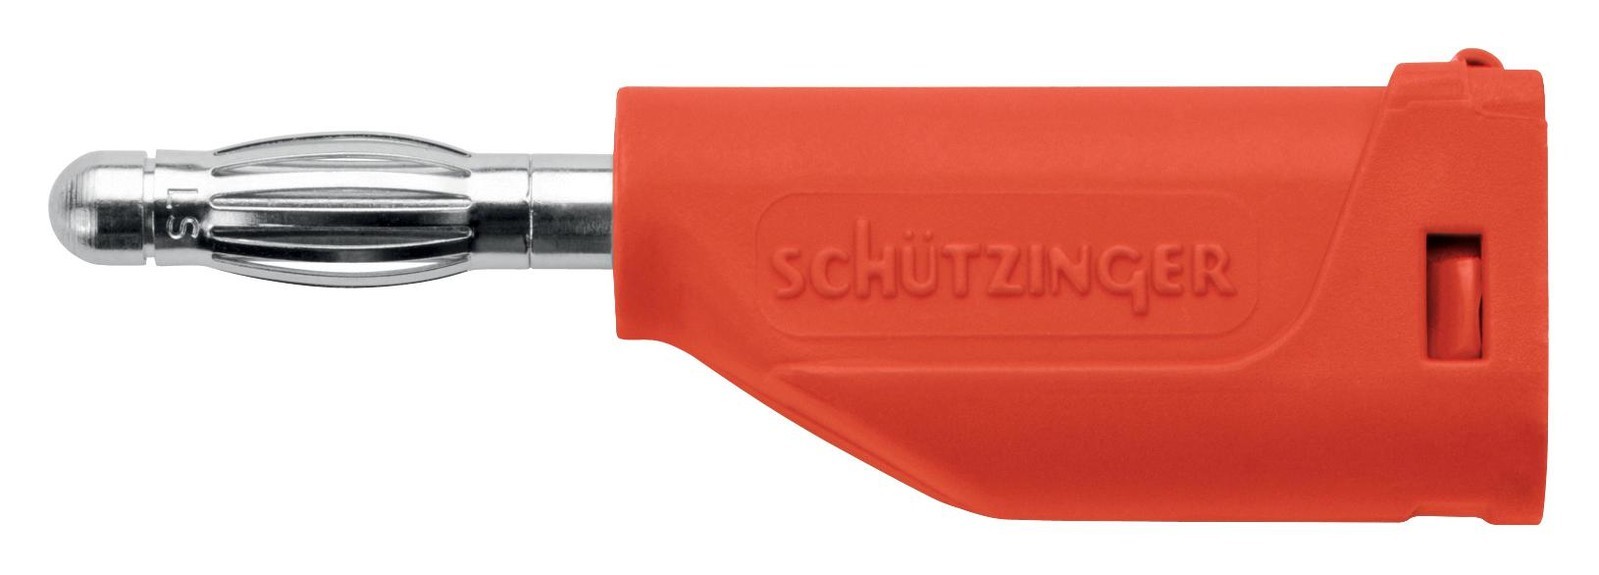 Schutzinger Fk 15 S NI / 2.5 / Rt Connector, Banana, Plug, 32A, Red, Screw